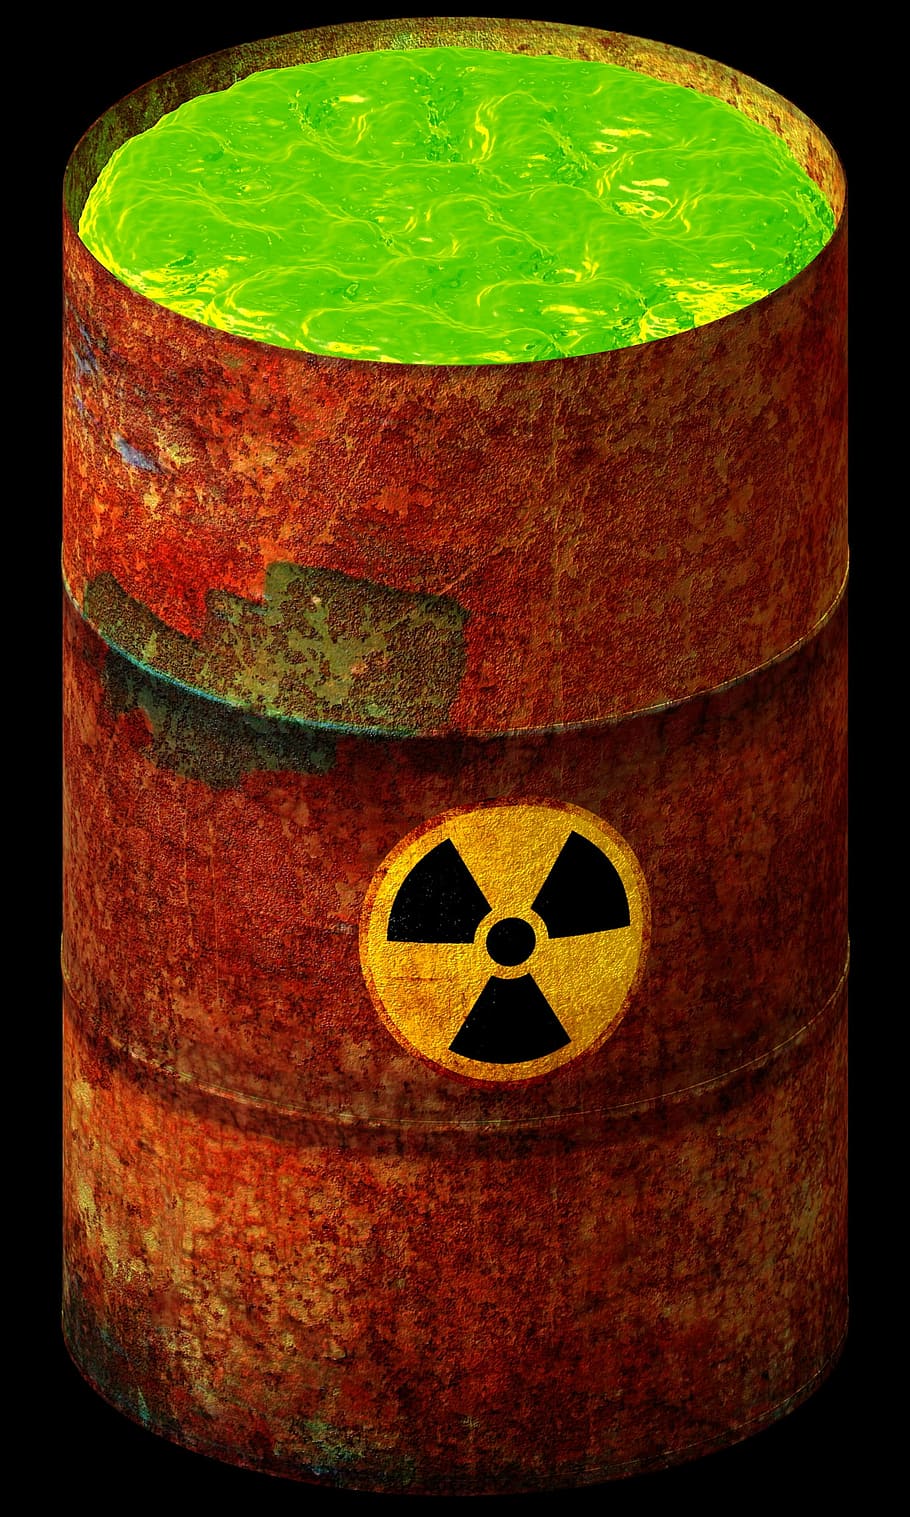 drum berkarat coklat, nuklir, limbah, radioaktif, racun, bahaya, radiasi, lingkungan, polusi, ekologi